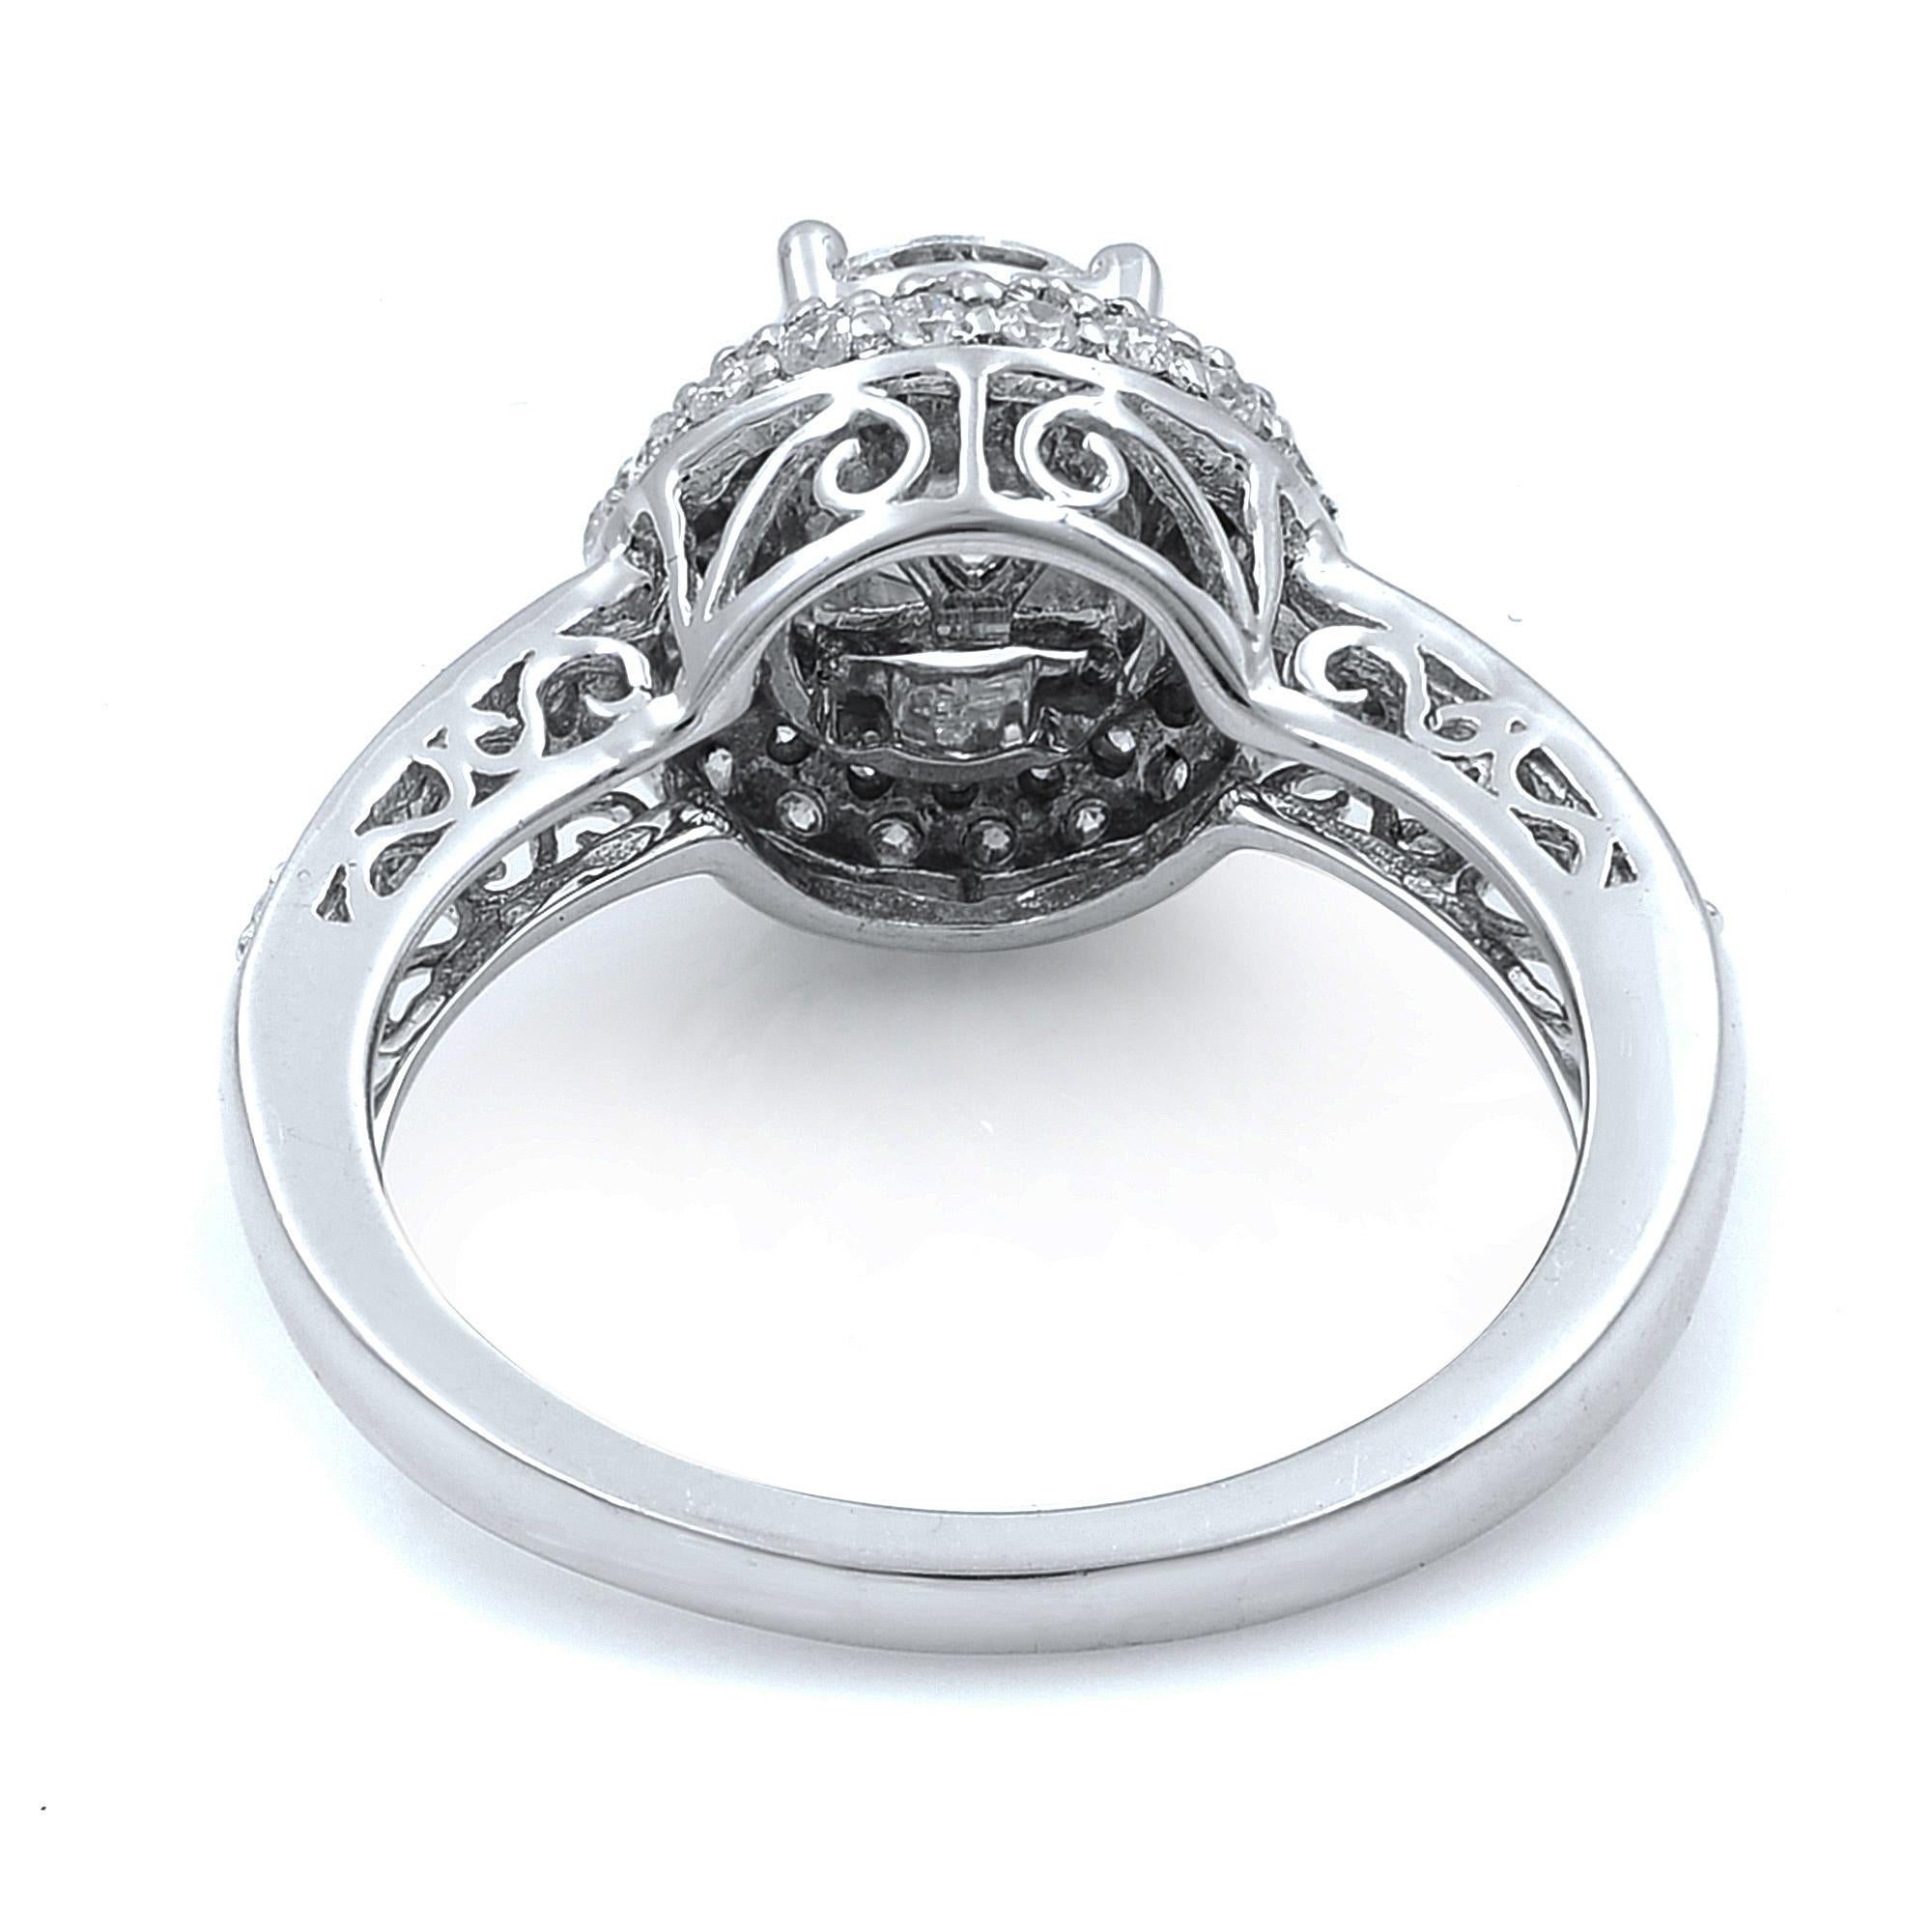 Round Cut Rachel Koen Diamond Halo Engagement Ring 14K White Gold 1.13cttw For Sale